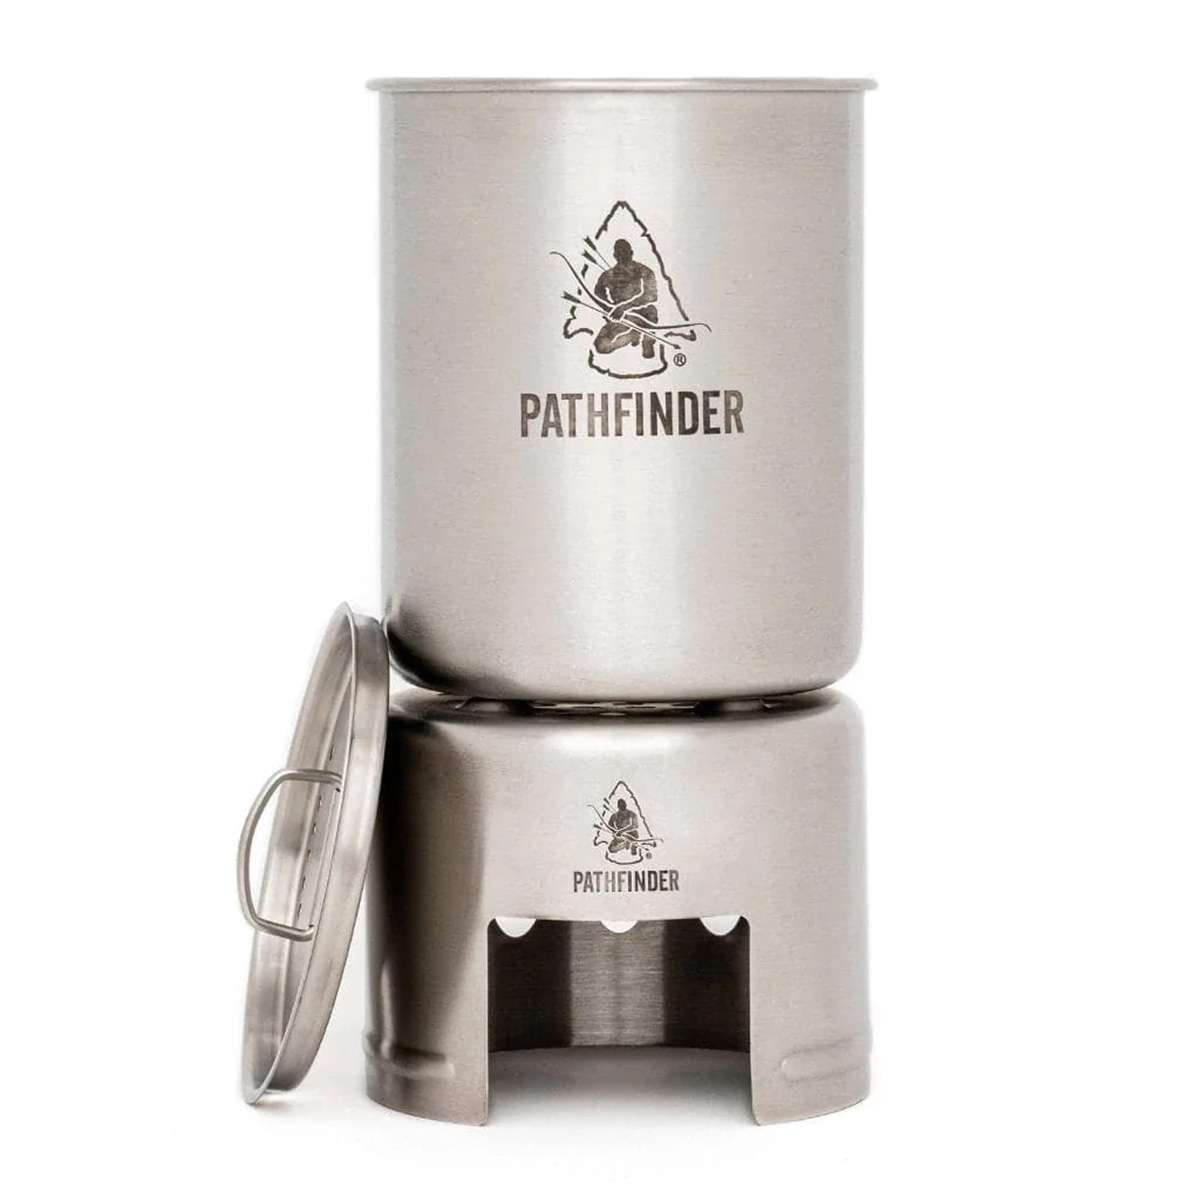 Pathfinder SS 32 oz Bottle-Cup-Stove Cook Set